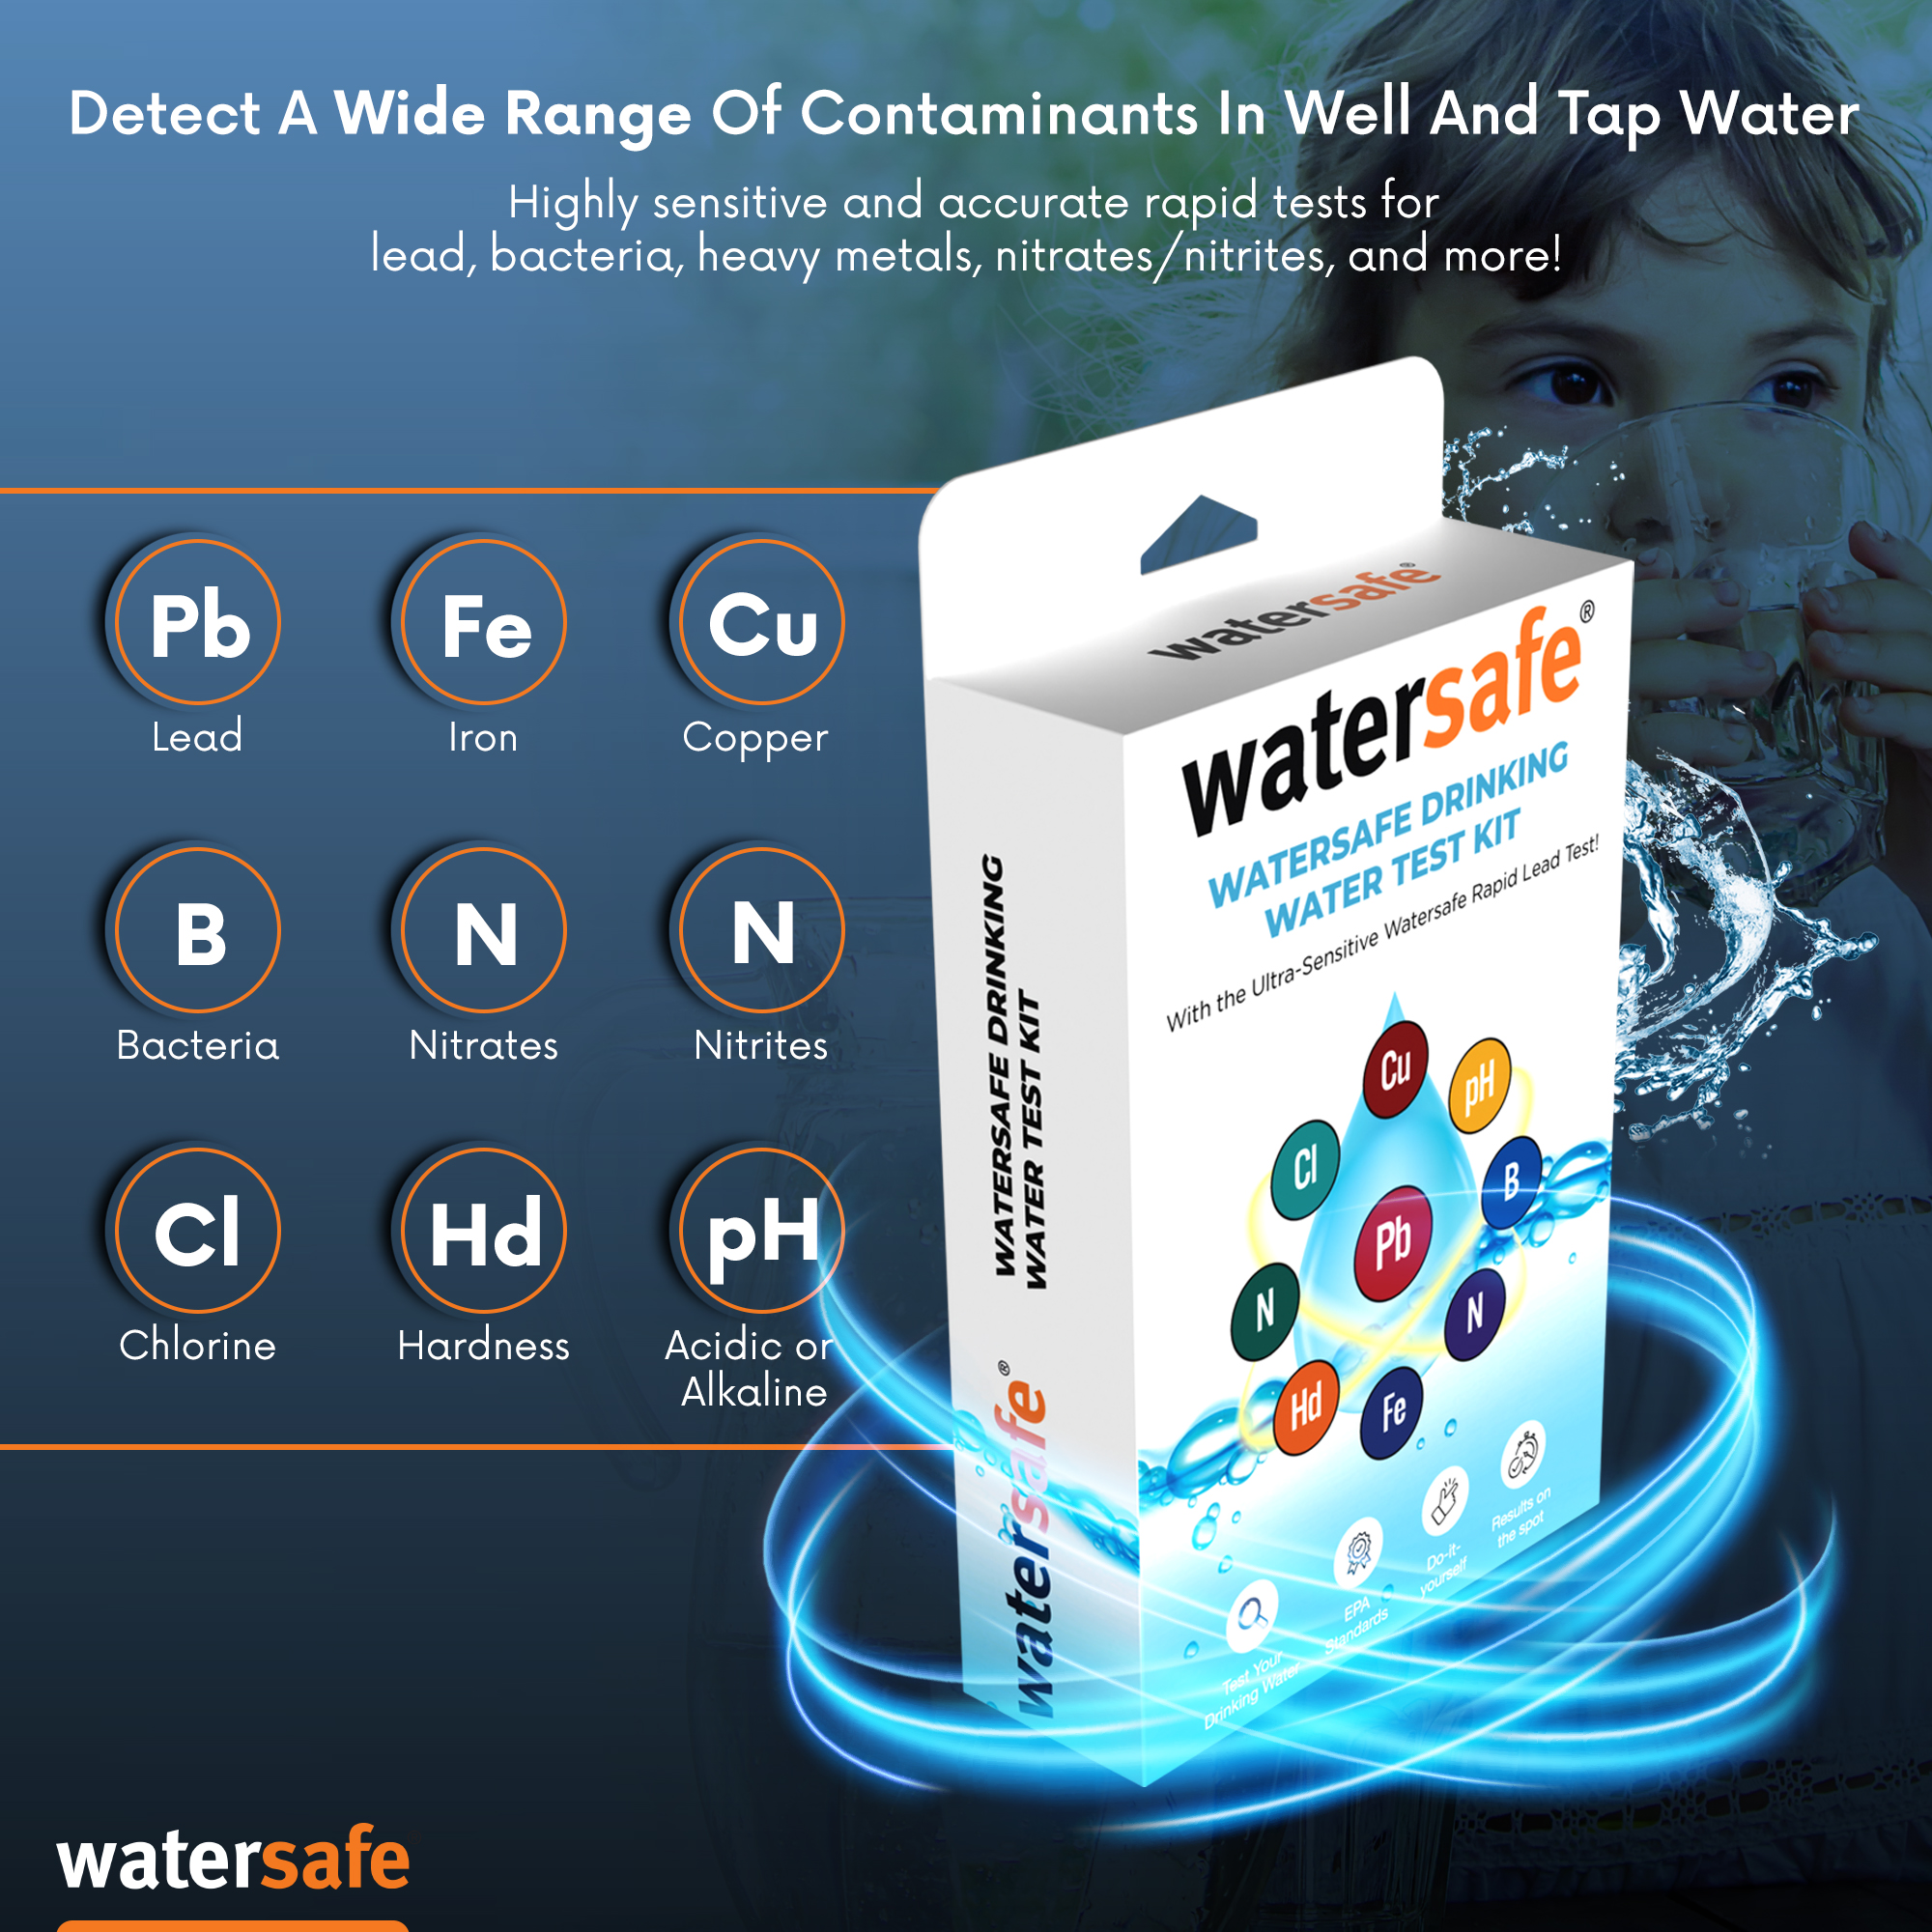 Watersafe WS425B City Water Test Kit